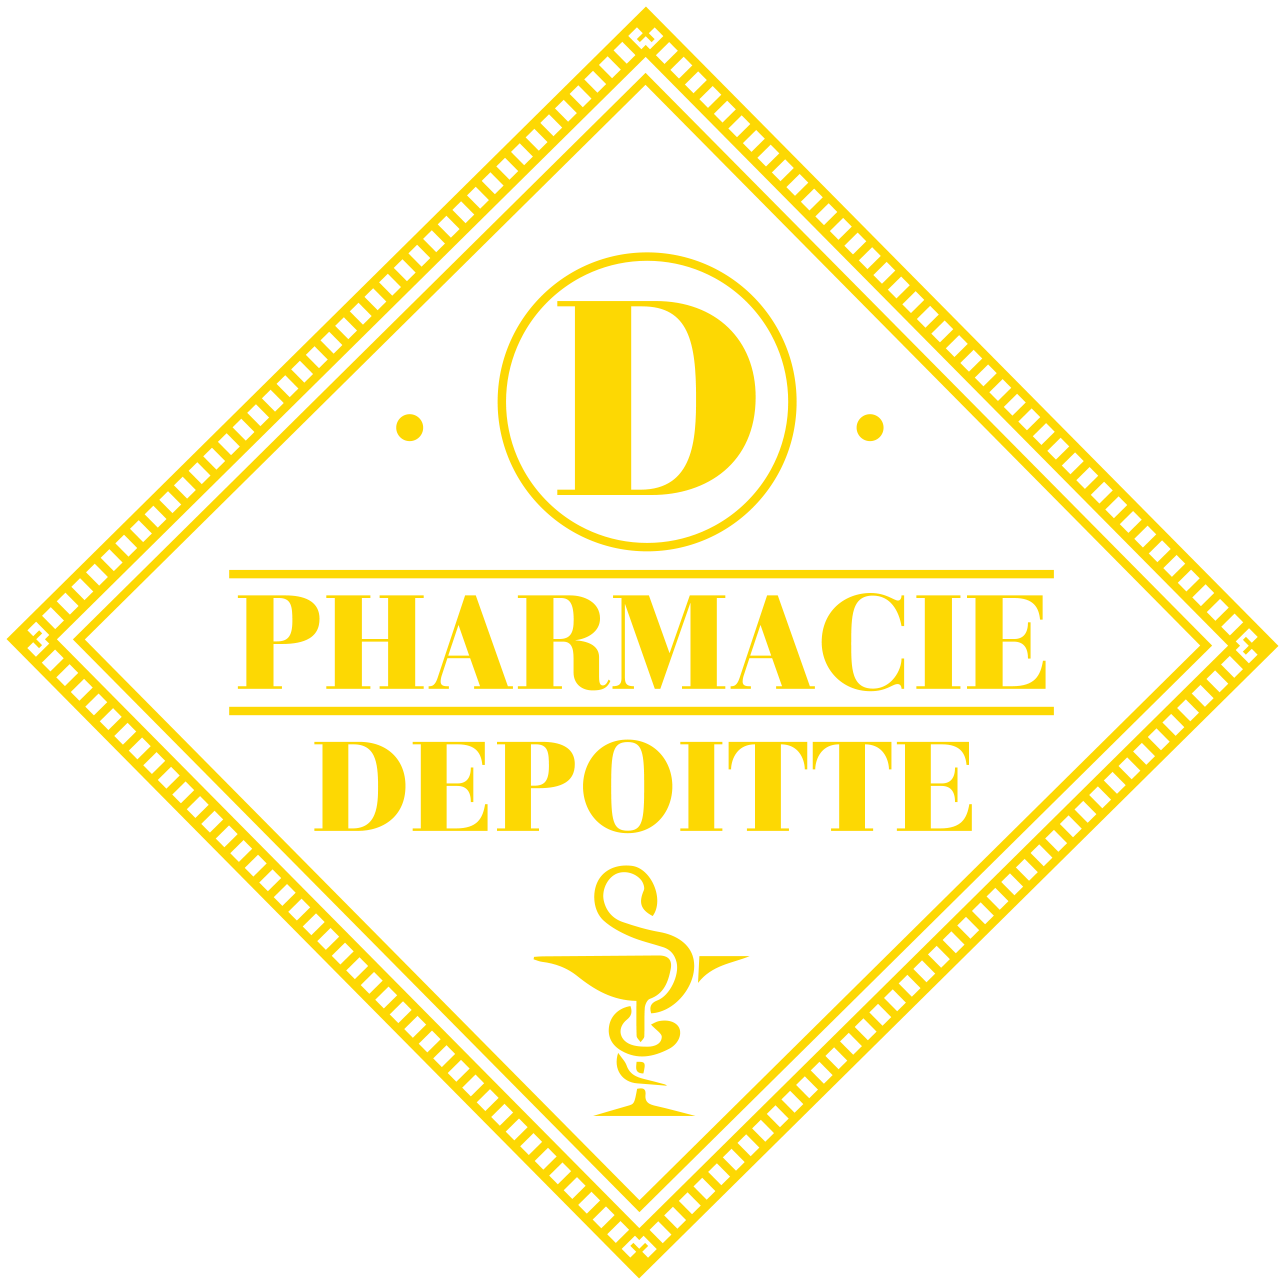 Pharmacie Depoitte logo